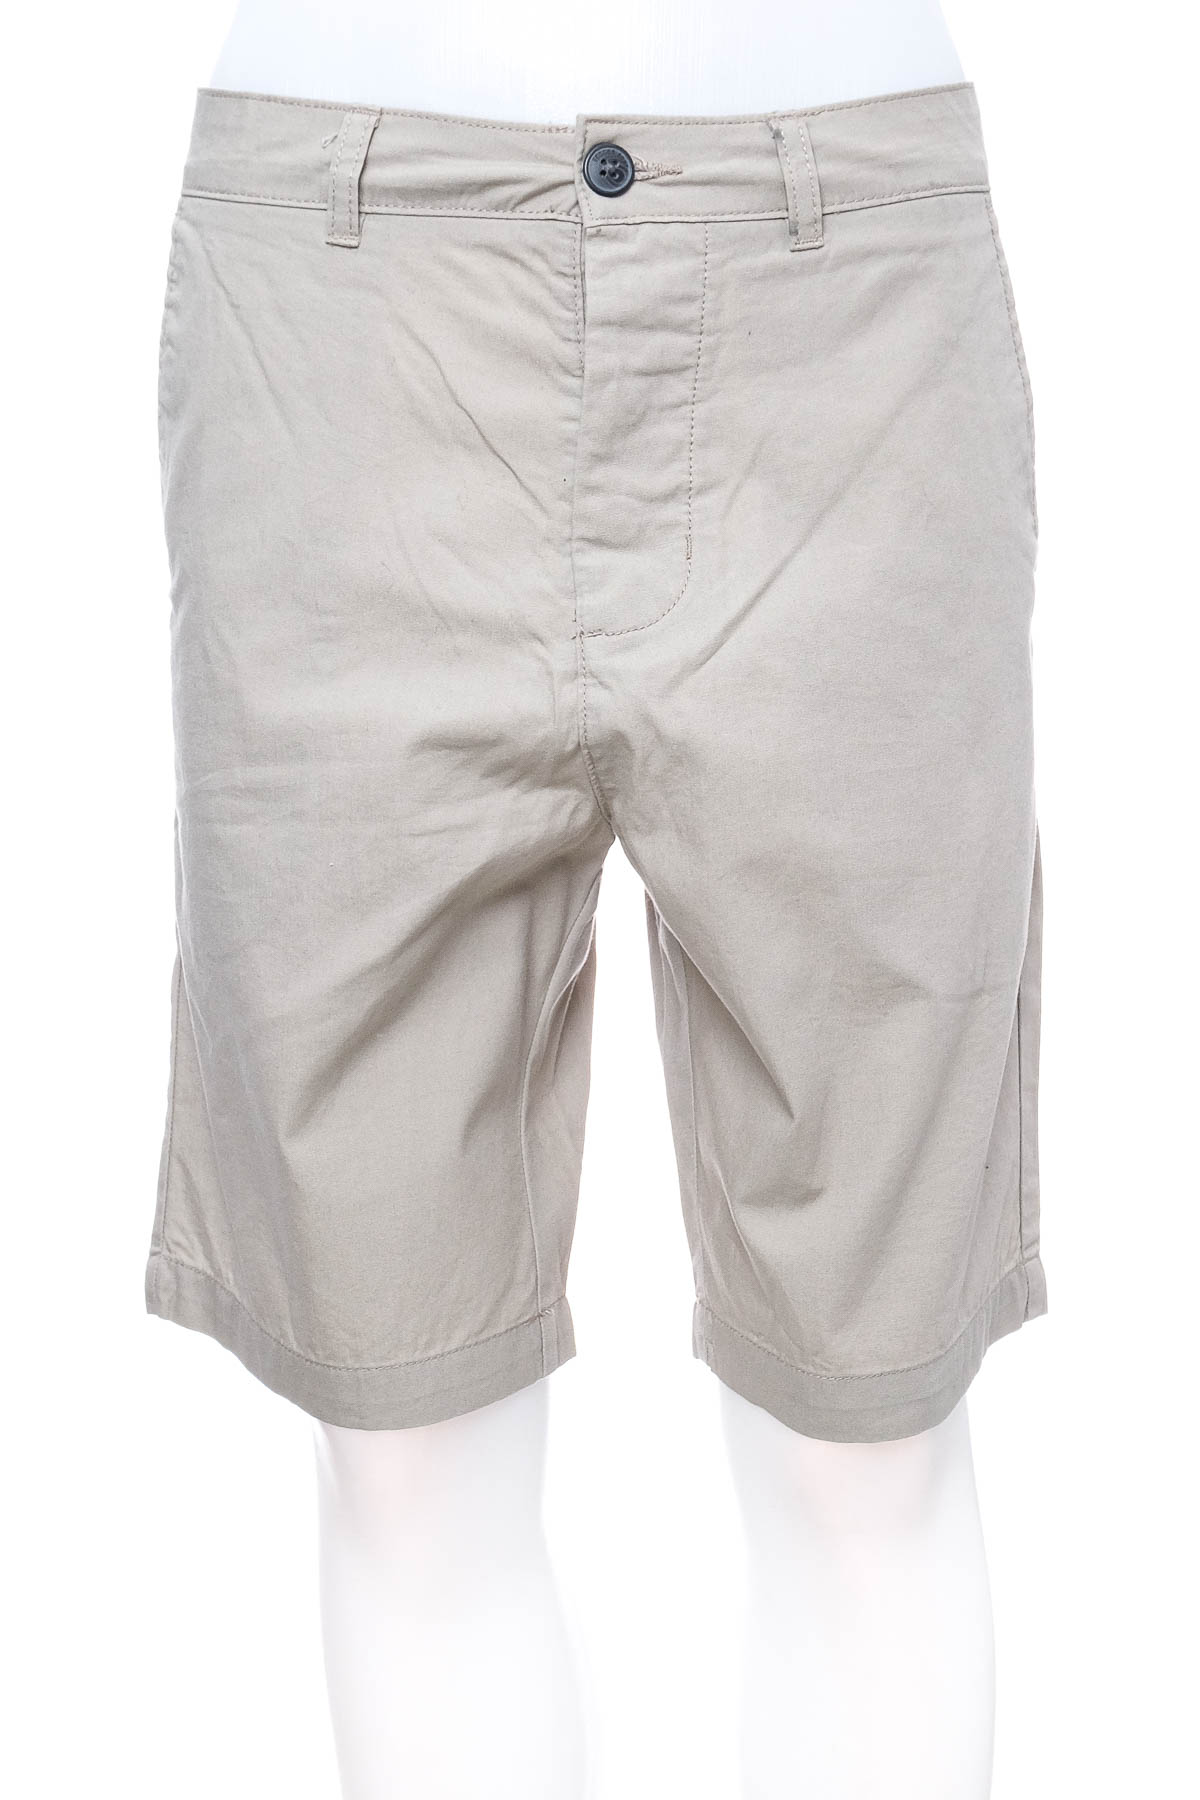 Men's shorts - DIVIDED - 0